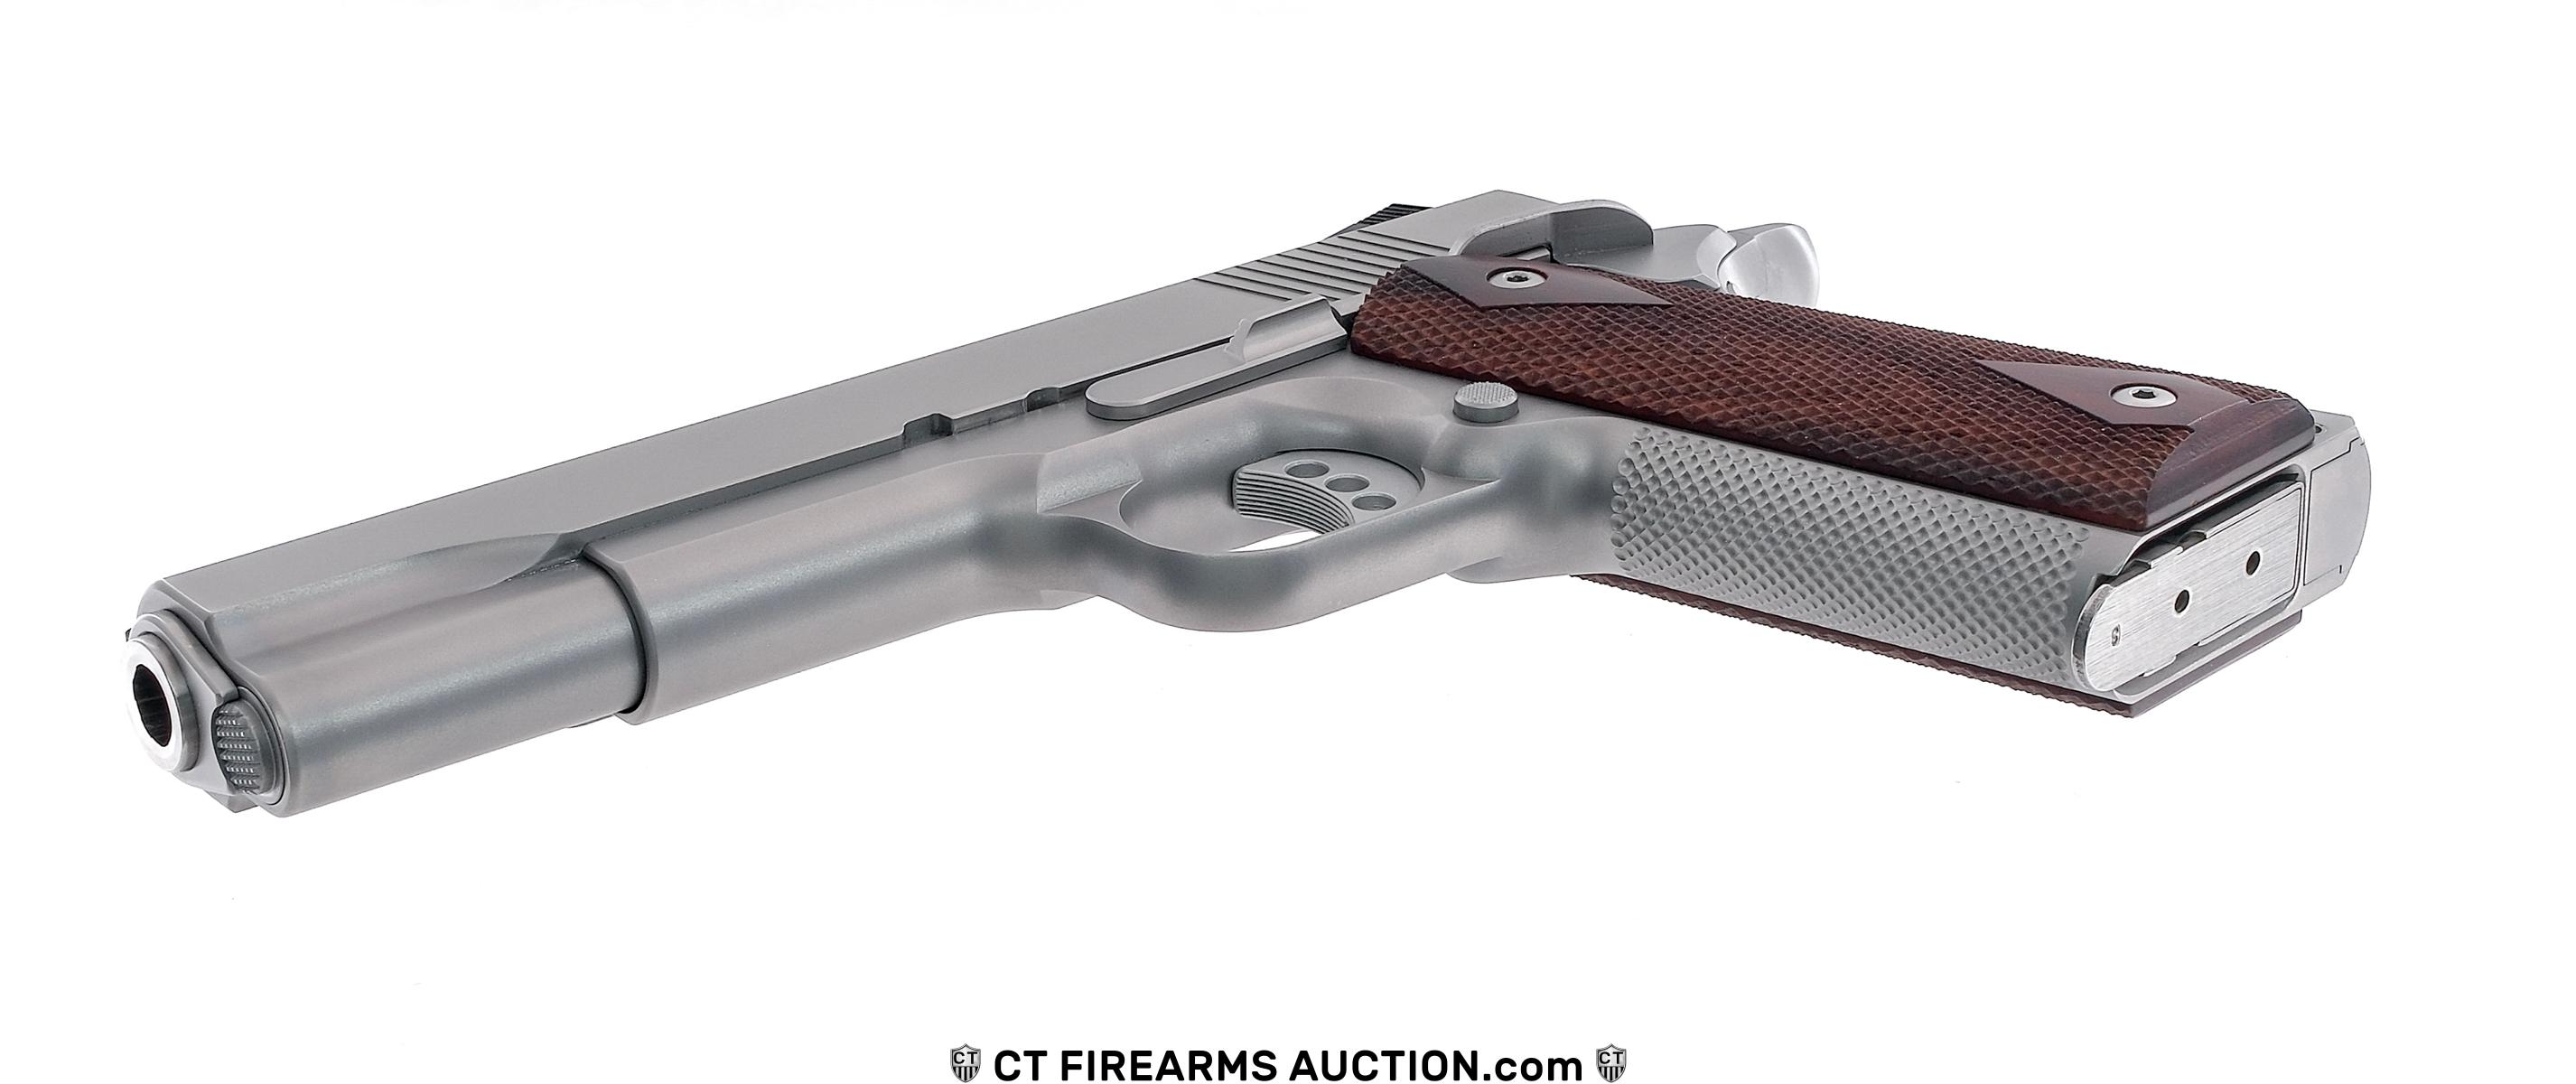 Custom Ed Brown 1911 9mm Semi Auto Pistol